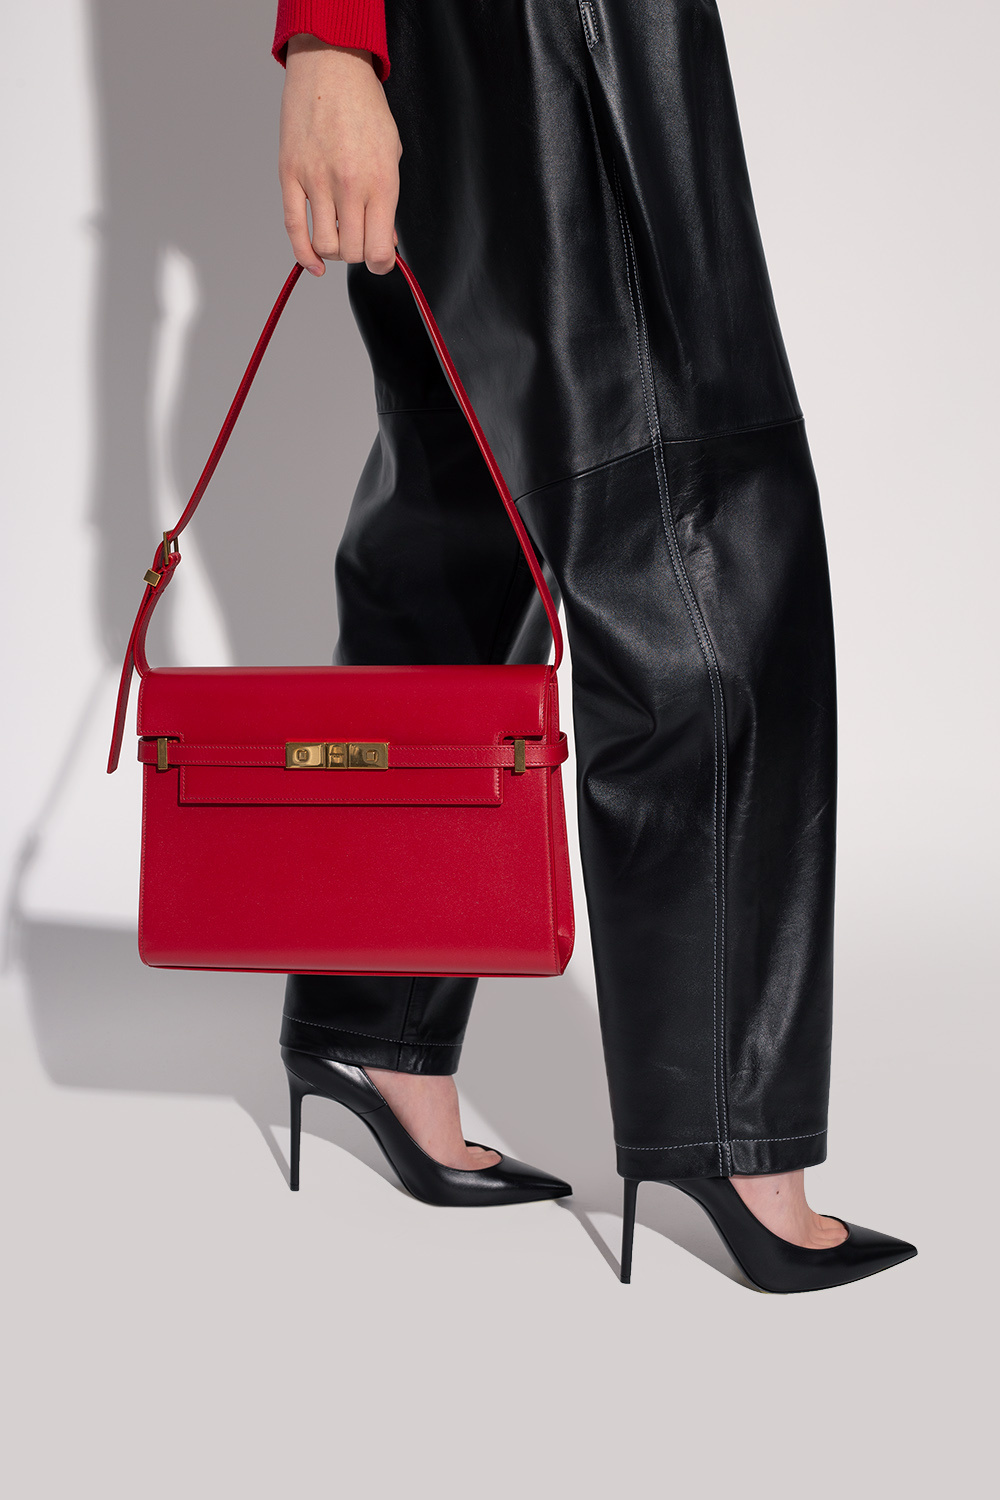 The Updated Version of the Saint Laurent Manhattan Bag is Already a Hit -  PurseBlog